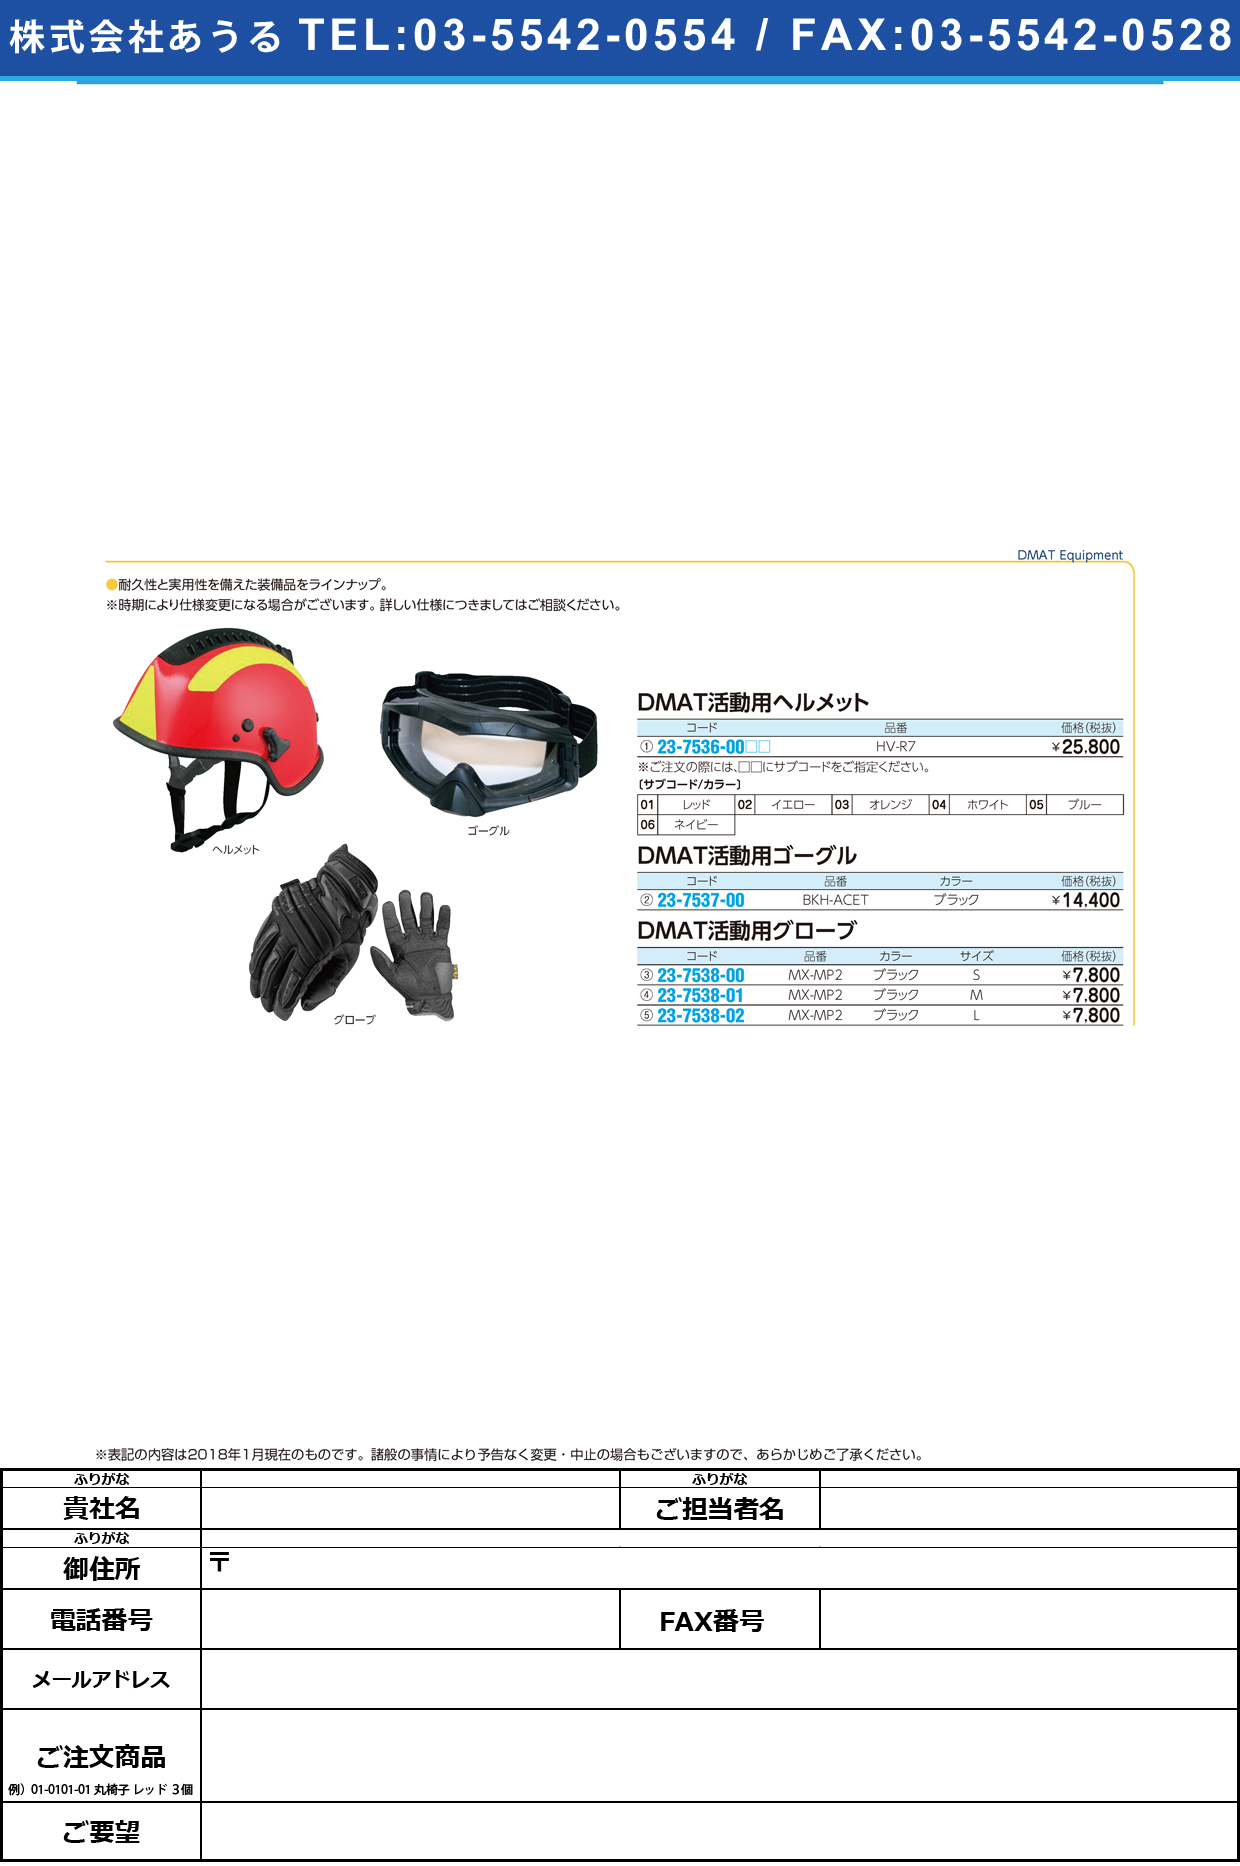 (23-7536-00)ＤＭＡＴ活動用ヘルメット HV-R7 DMATｶﾂﾄﾞｳﾖｳﾍﾙﾒｯﾄ オレンジ【1個単位】【2018年カタログ商品】